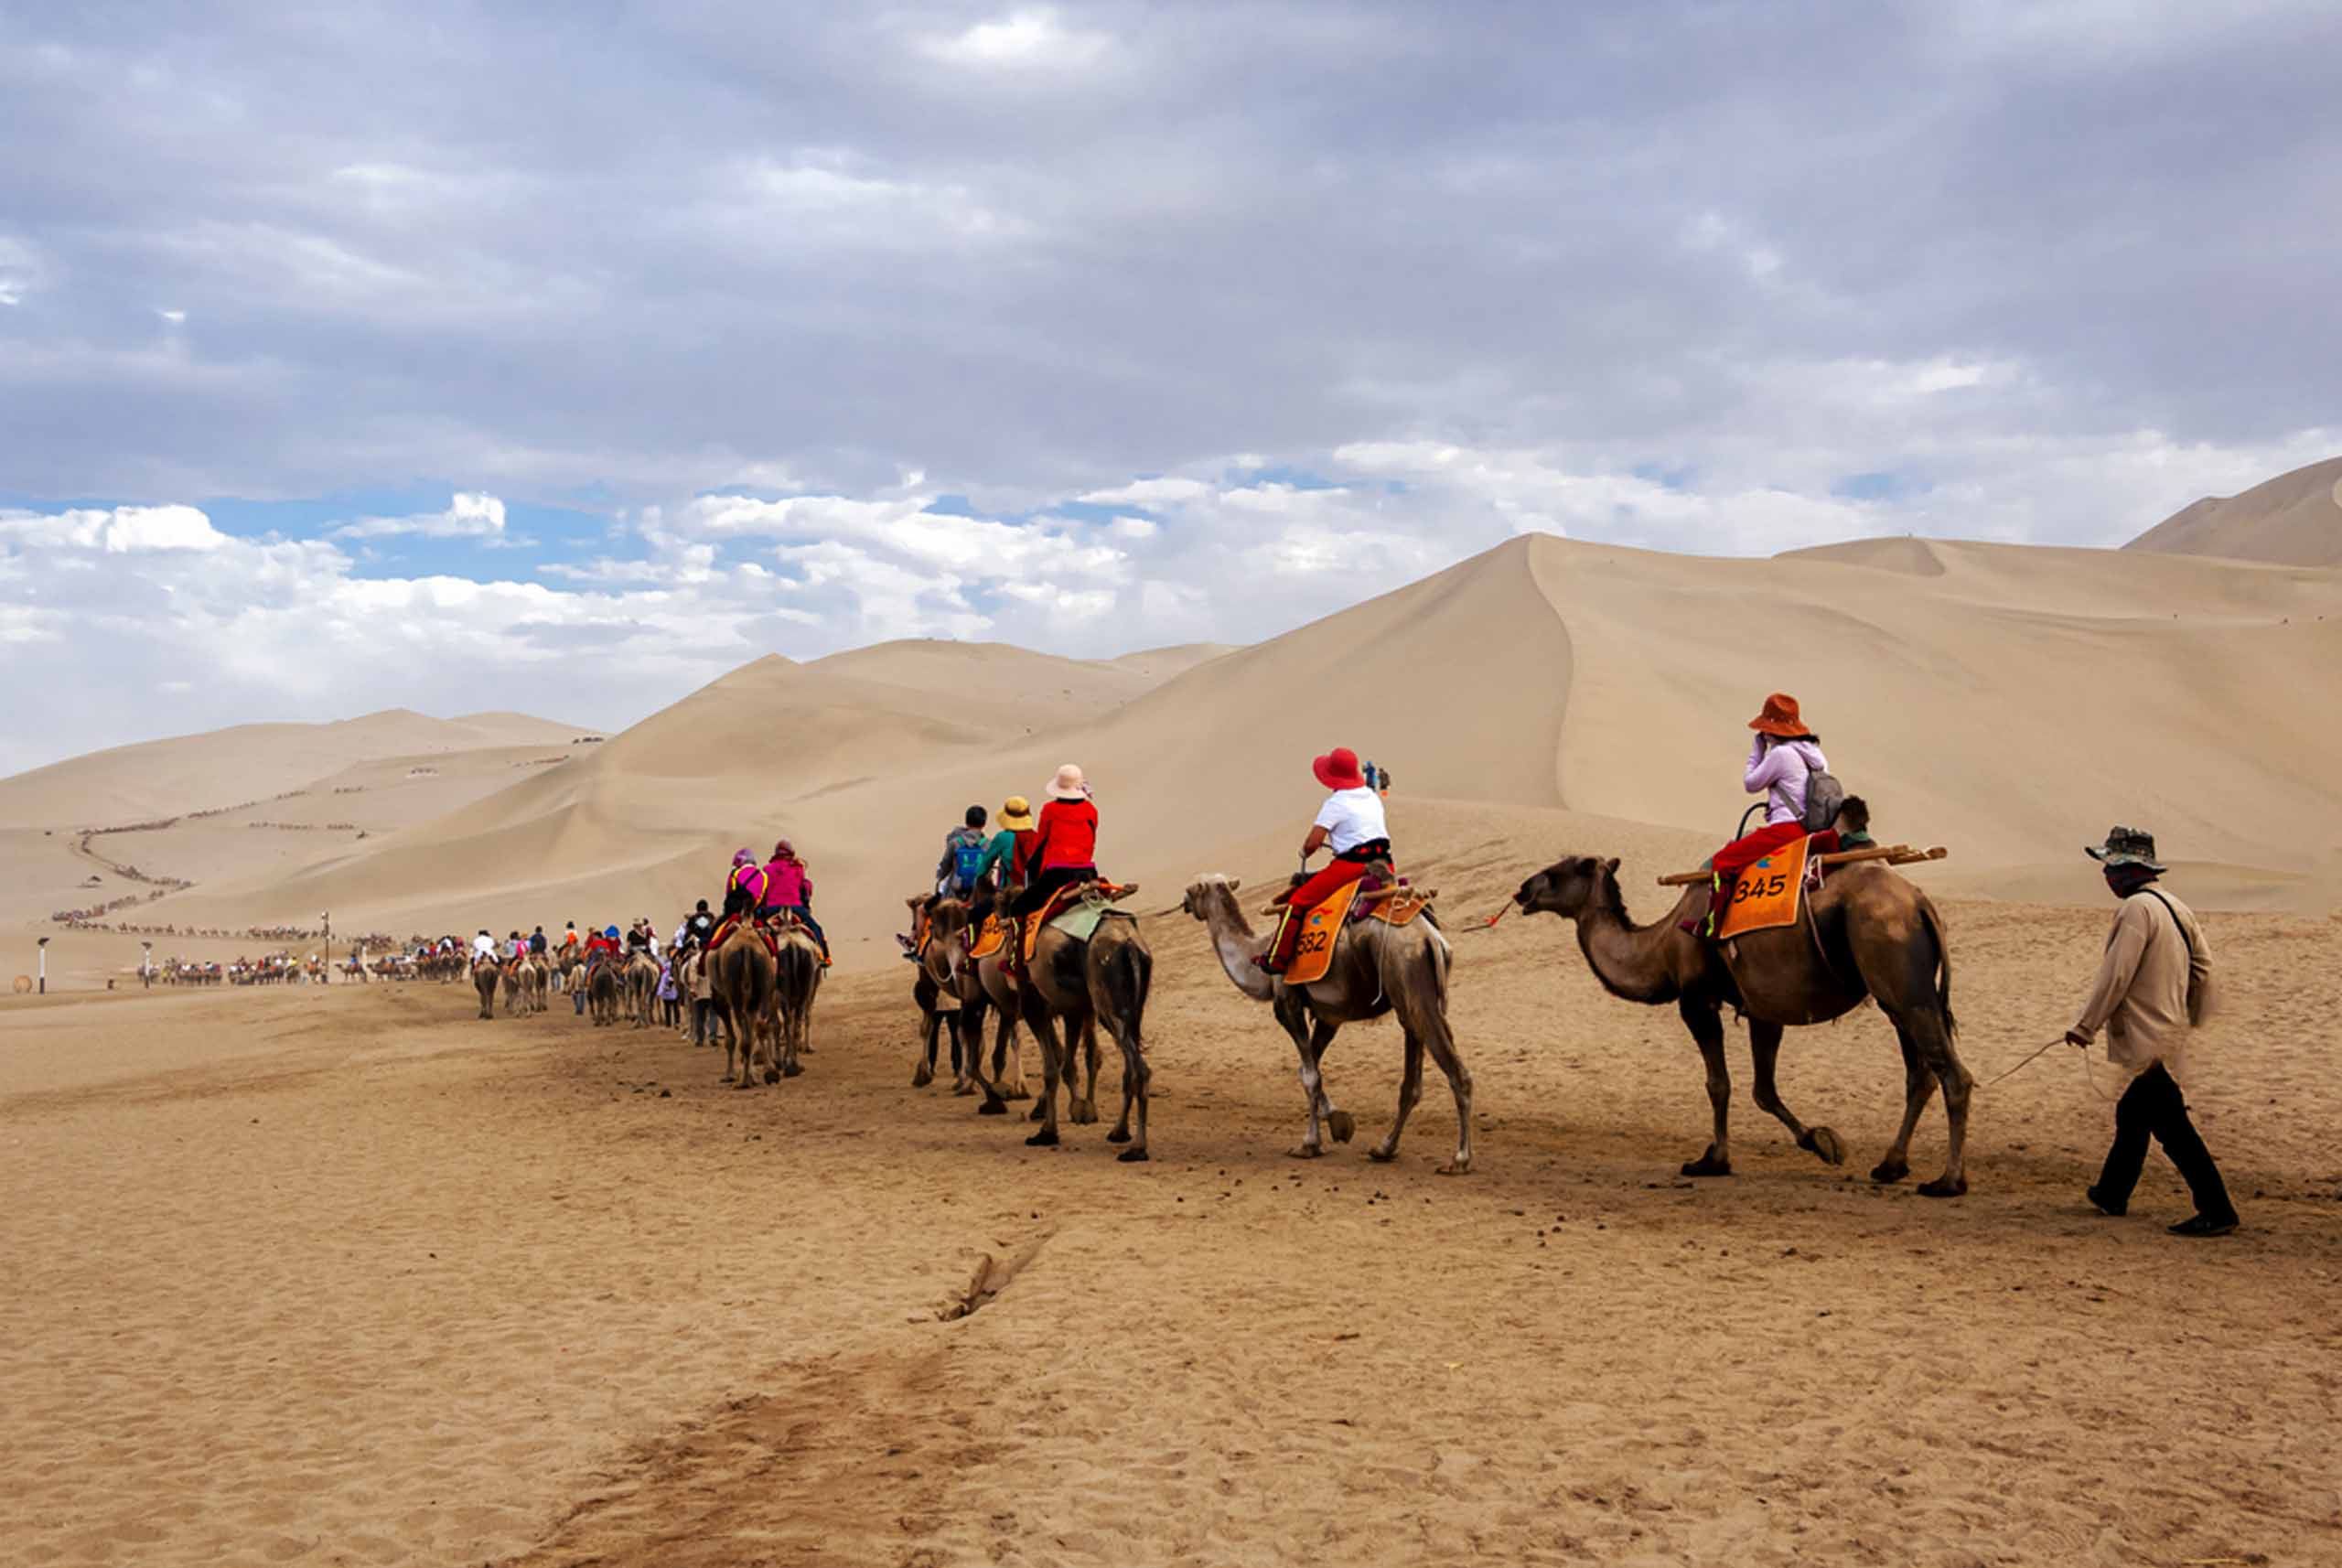 Silk Road Tours International